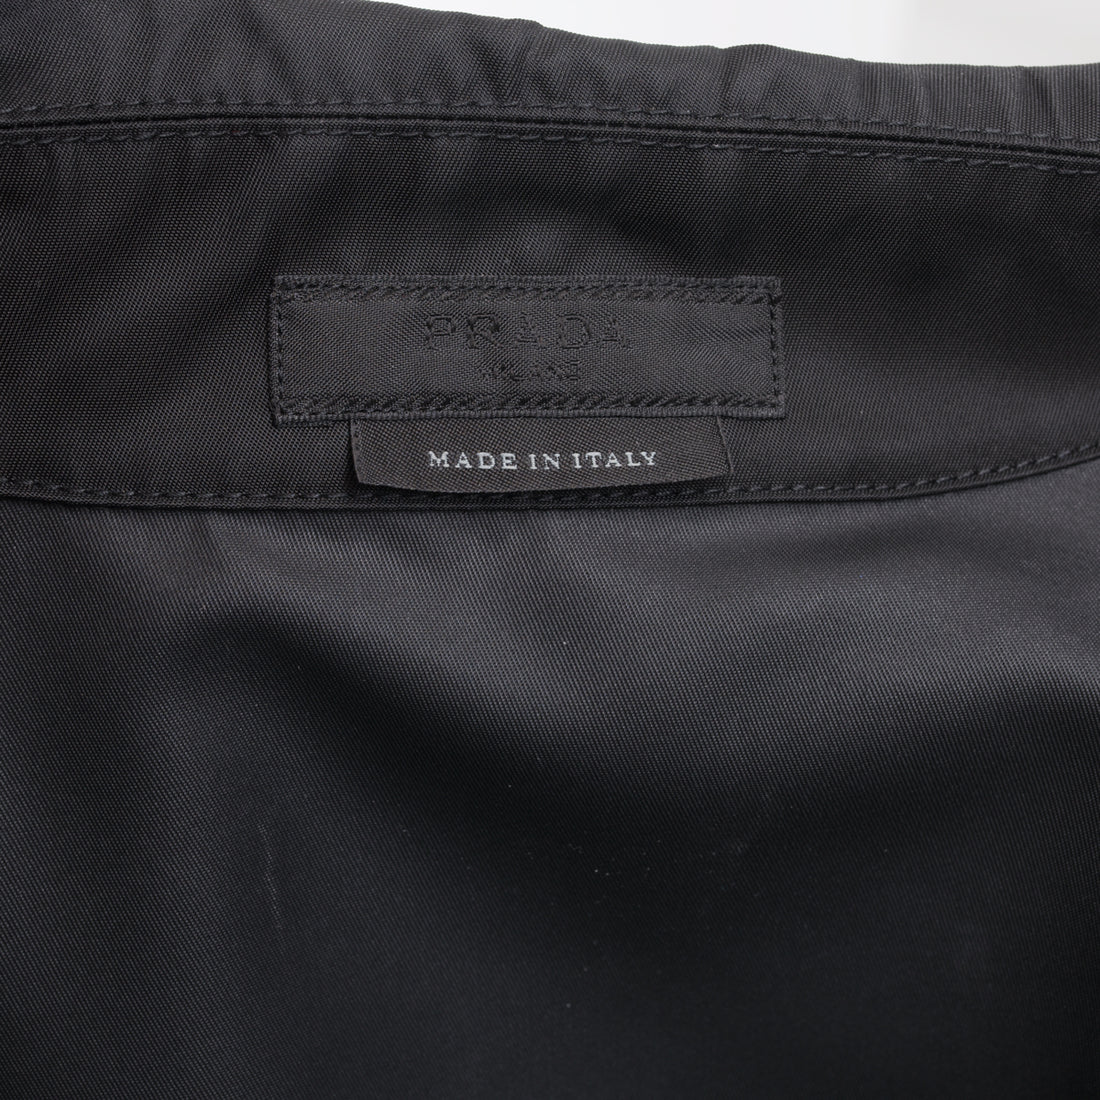 Prada Fall 2015 Black Nylon Short Sleeve Runway Jacket - M